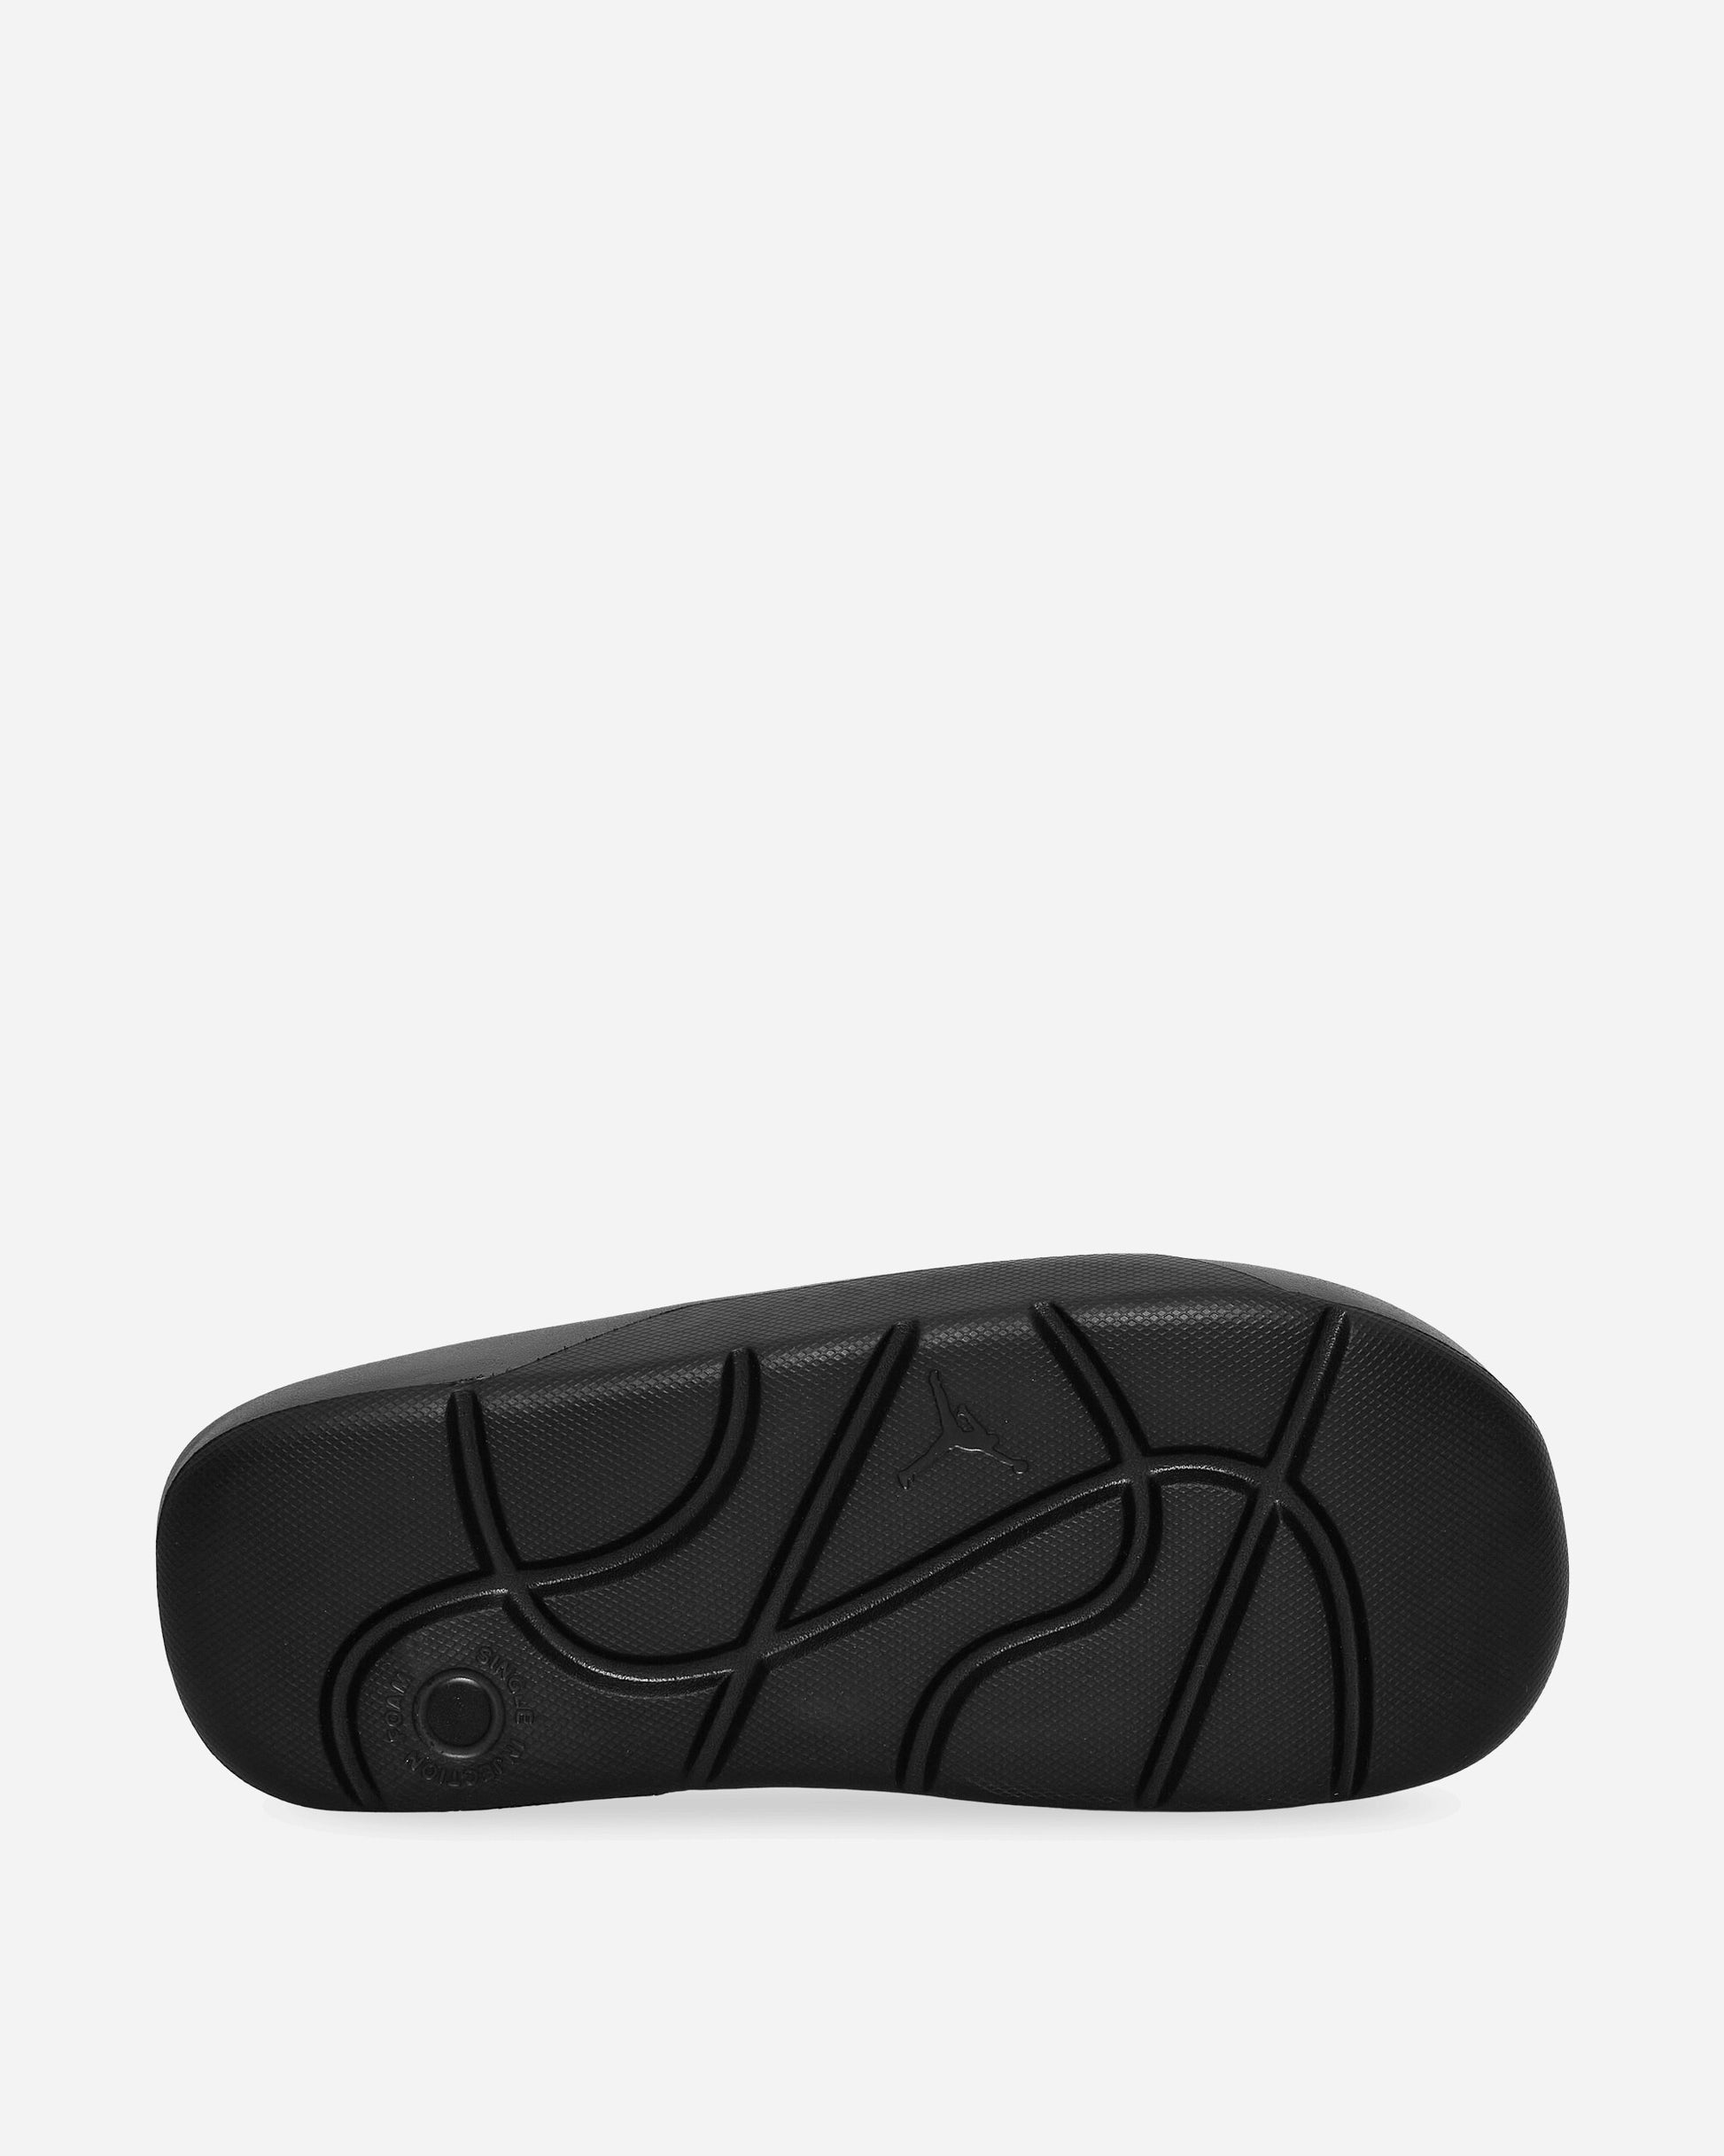 Nike Jordan Jordan Post Slide Black/Black Sneakers Low DX5575-001